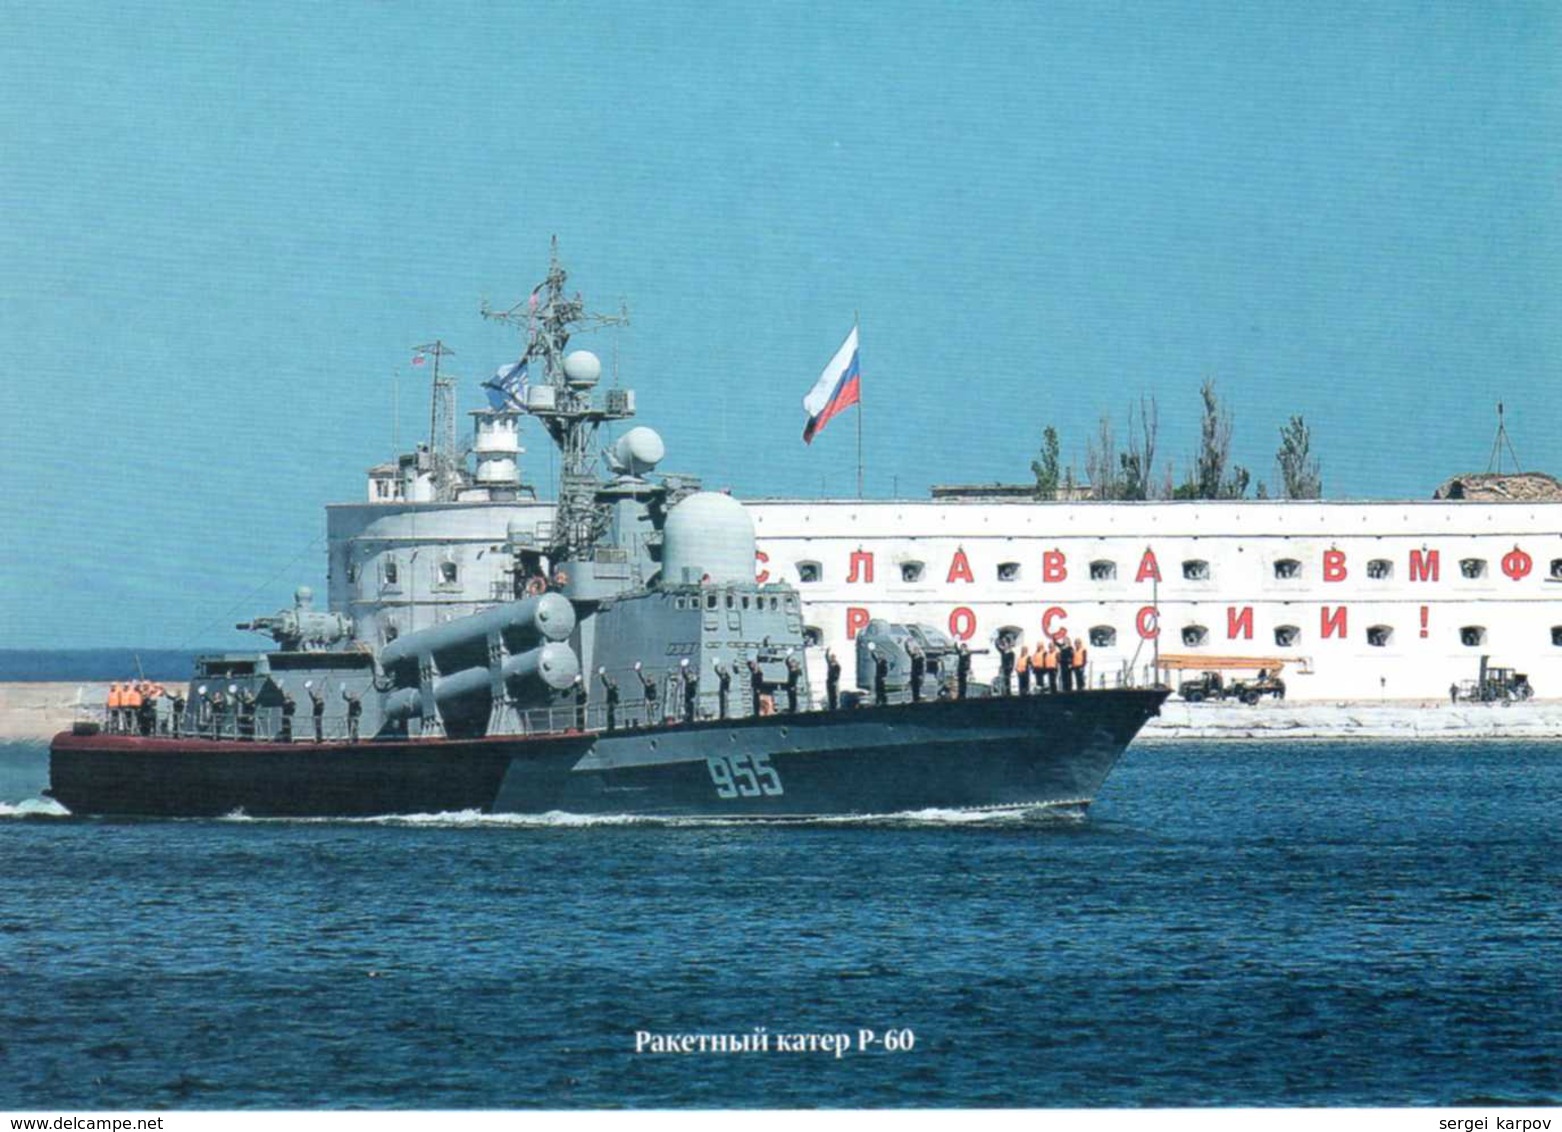 Russian Navy, part III (Russian Black sea Navy Fleet), 2014.